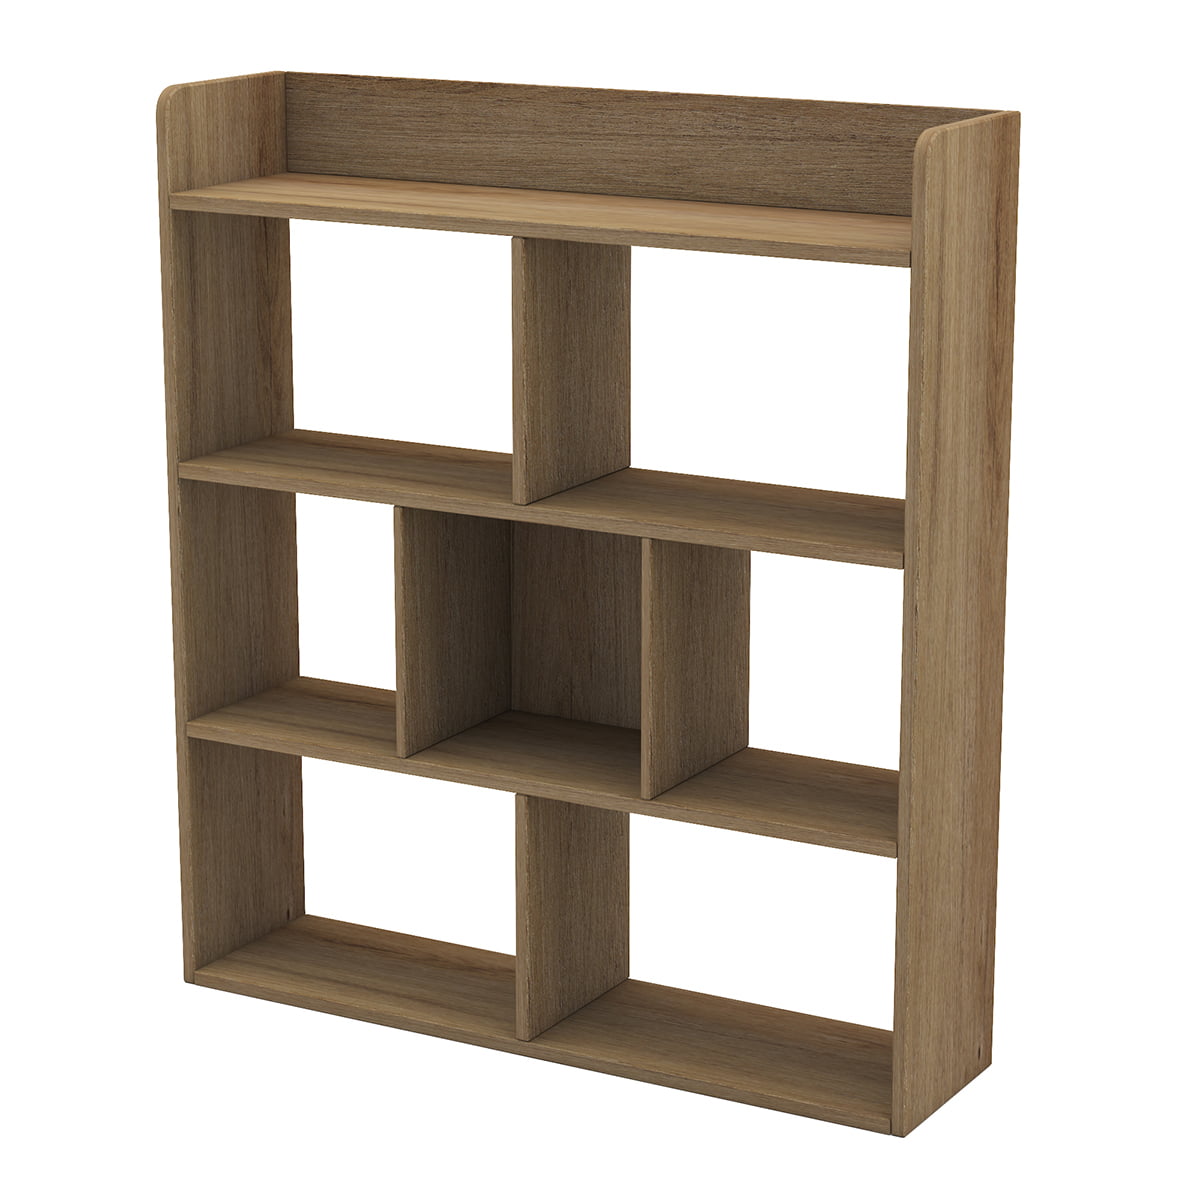 Modern Wooden 7 Cube Bookshelf Organizer